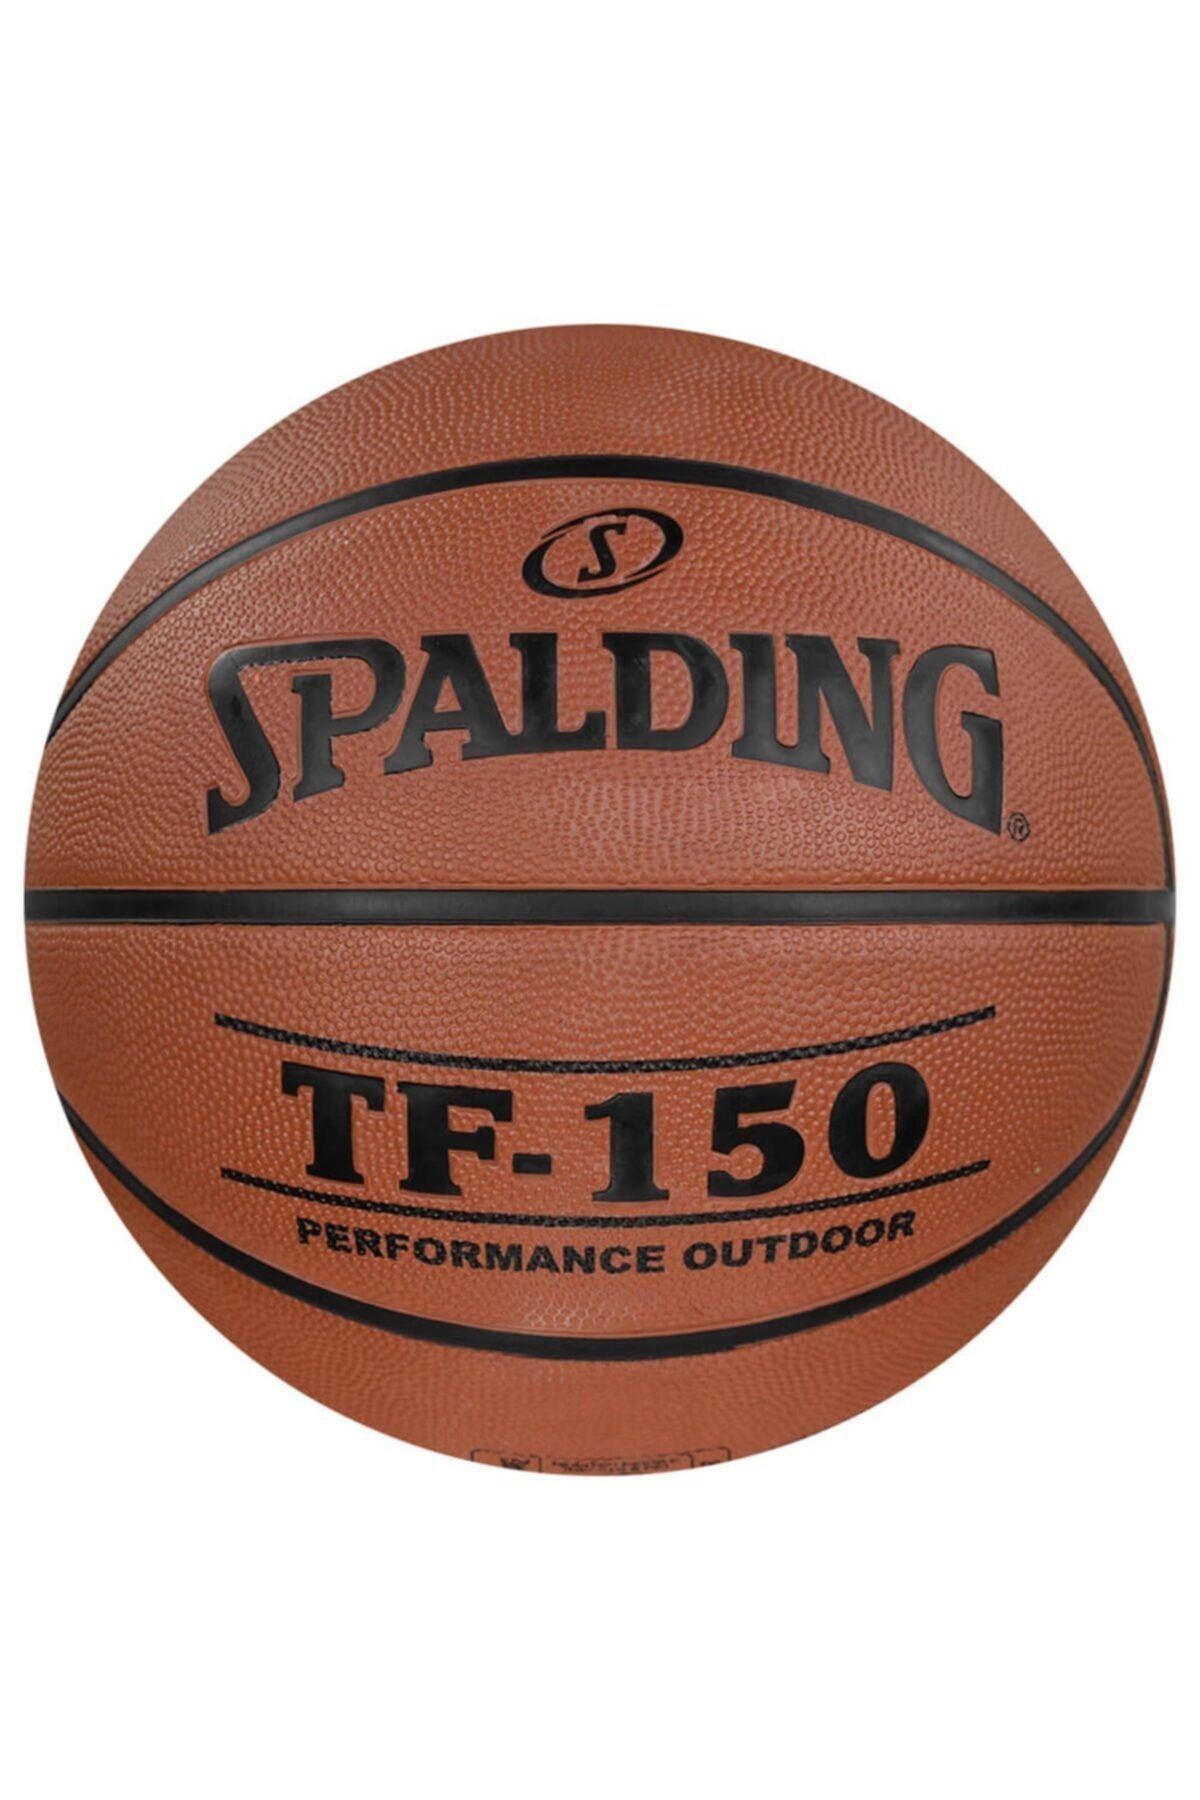 Spalding Tf-150 Kauçuk 6 No Basketbol Topu